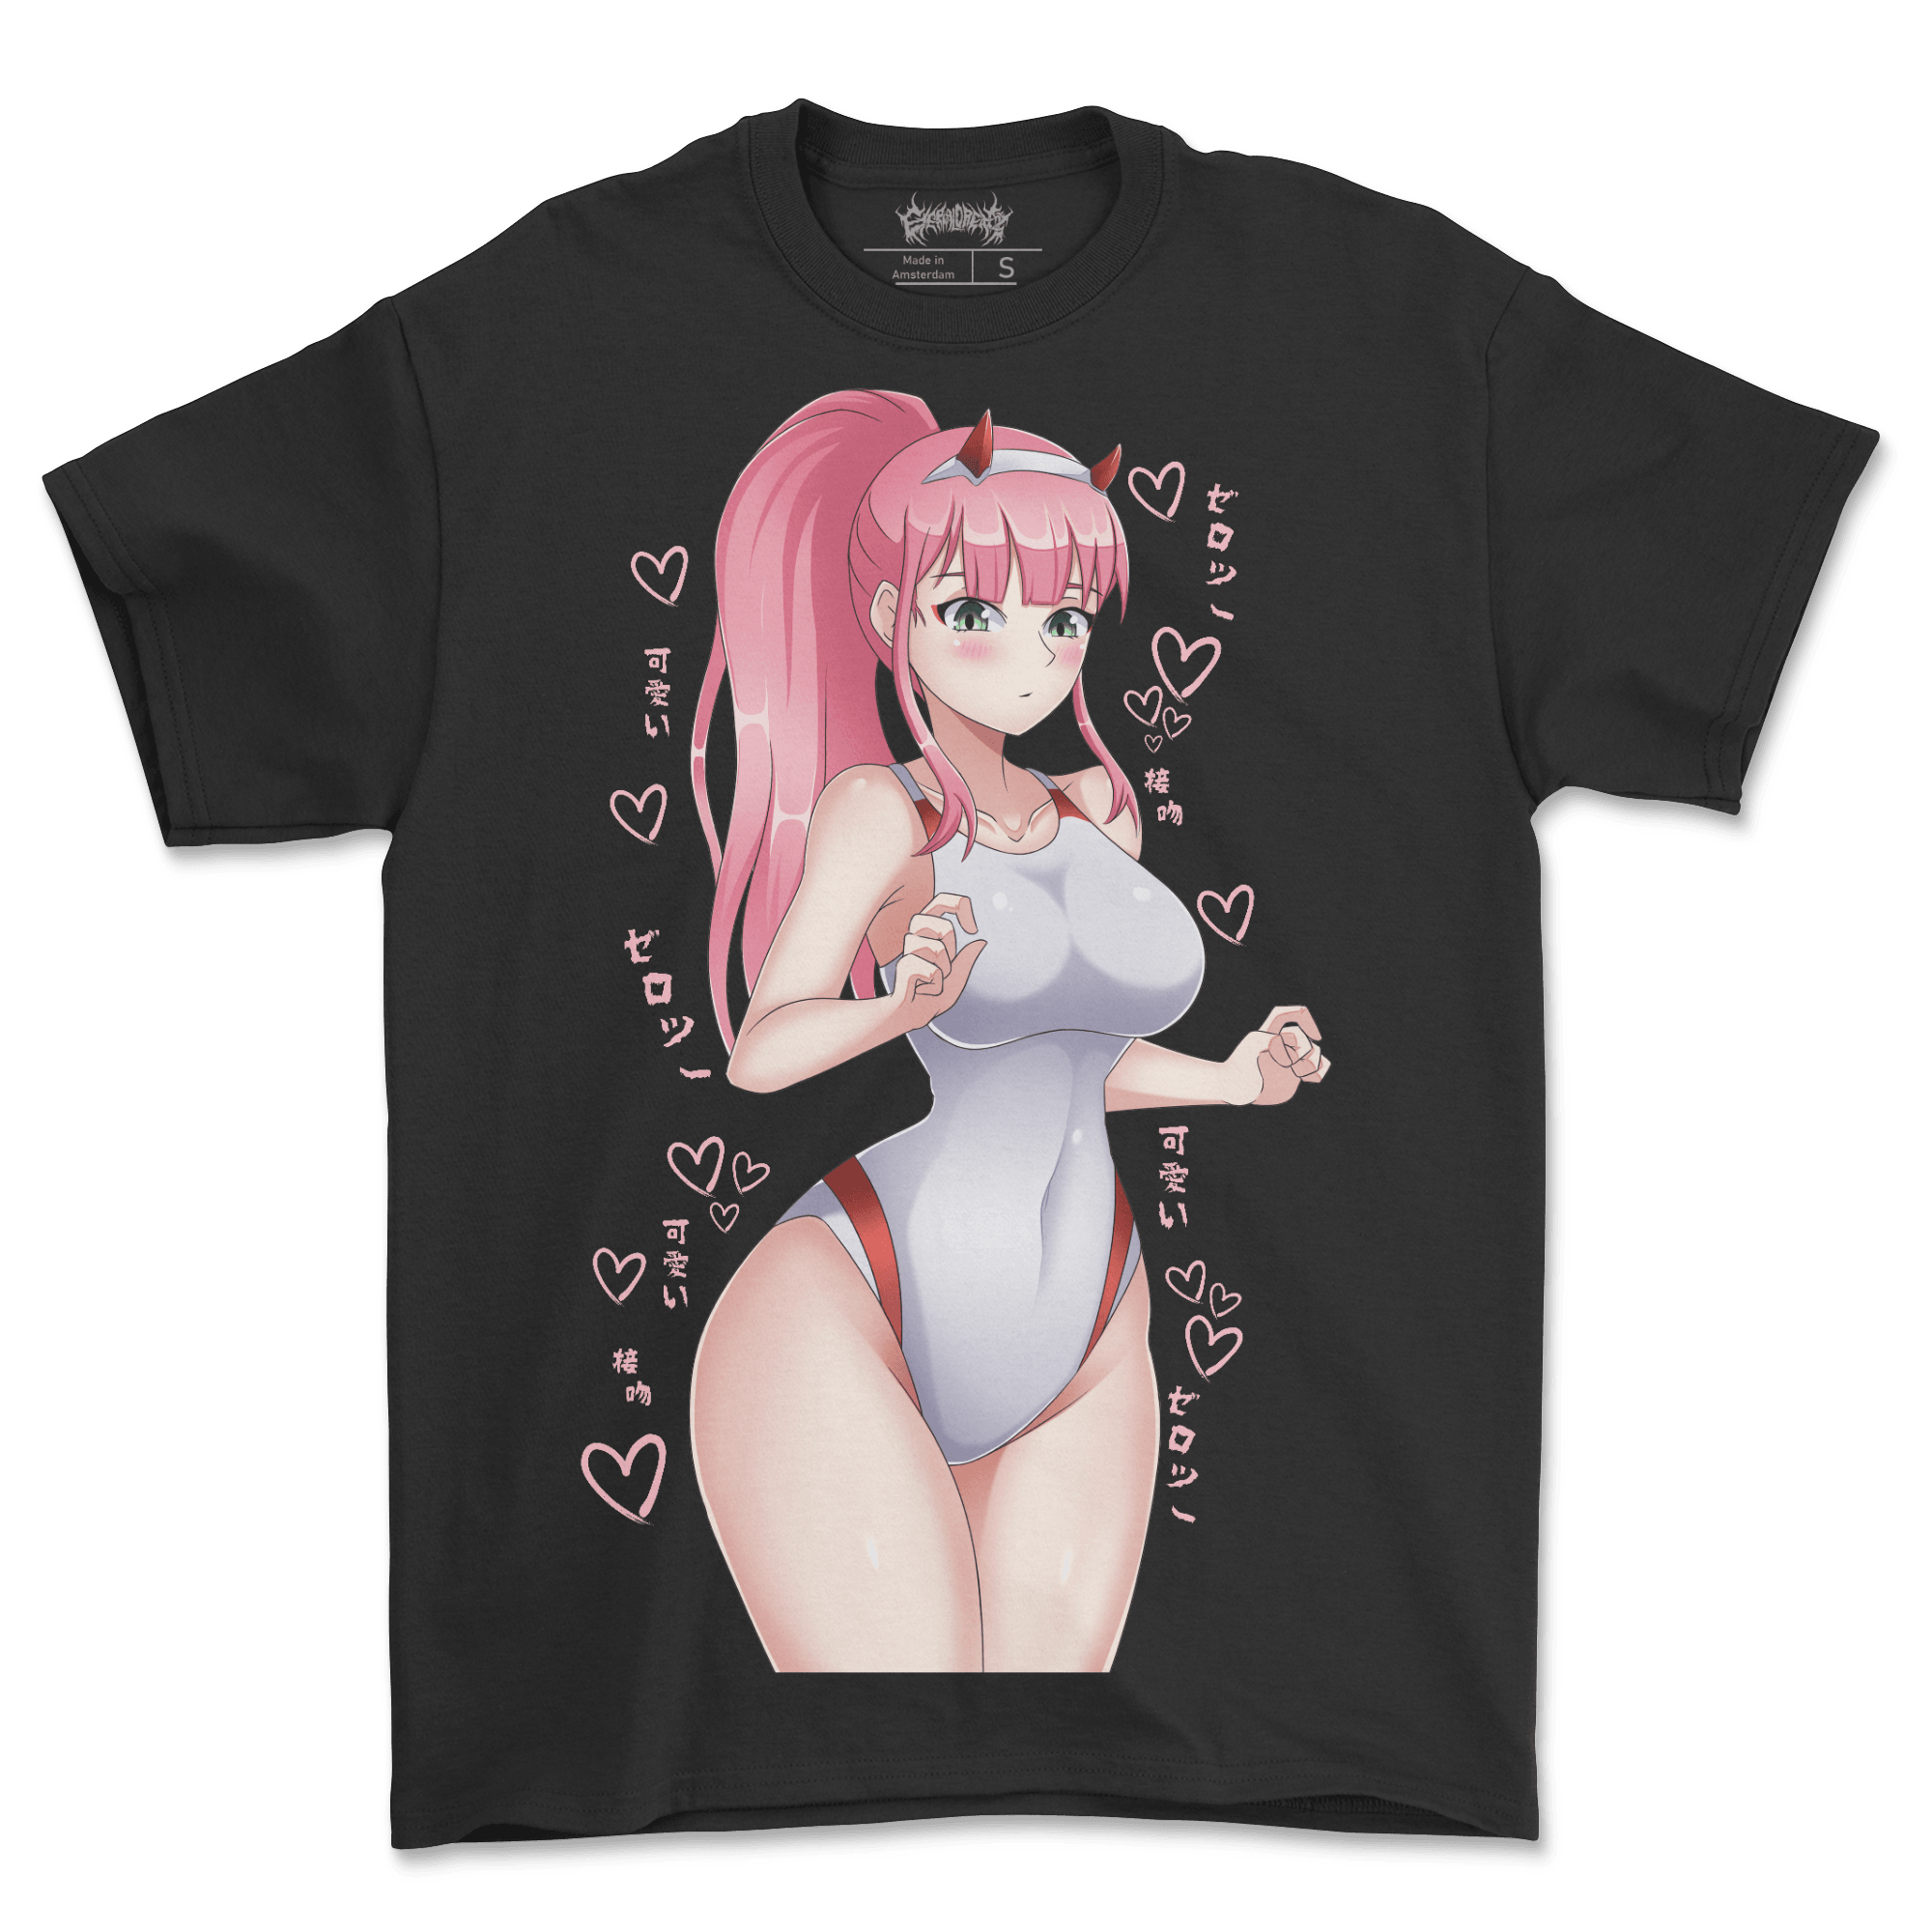 Darling - Eternal Dreamz Clothing Anime Streetwear & Anime Clothing